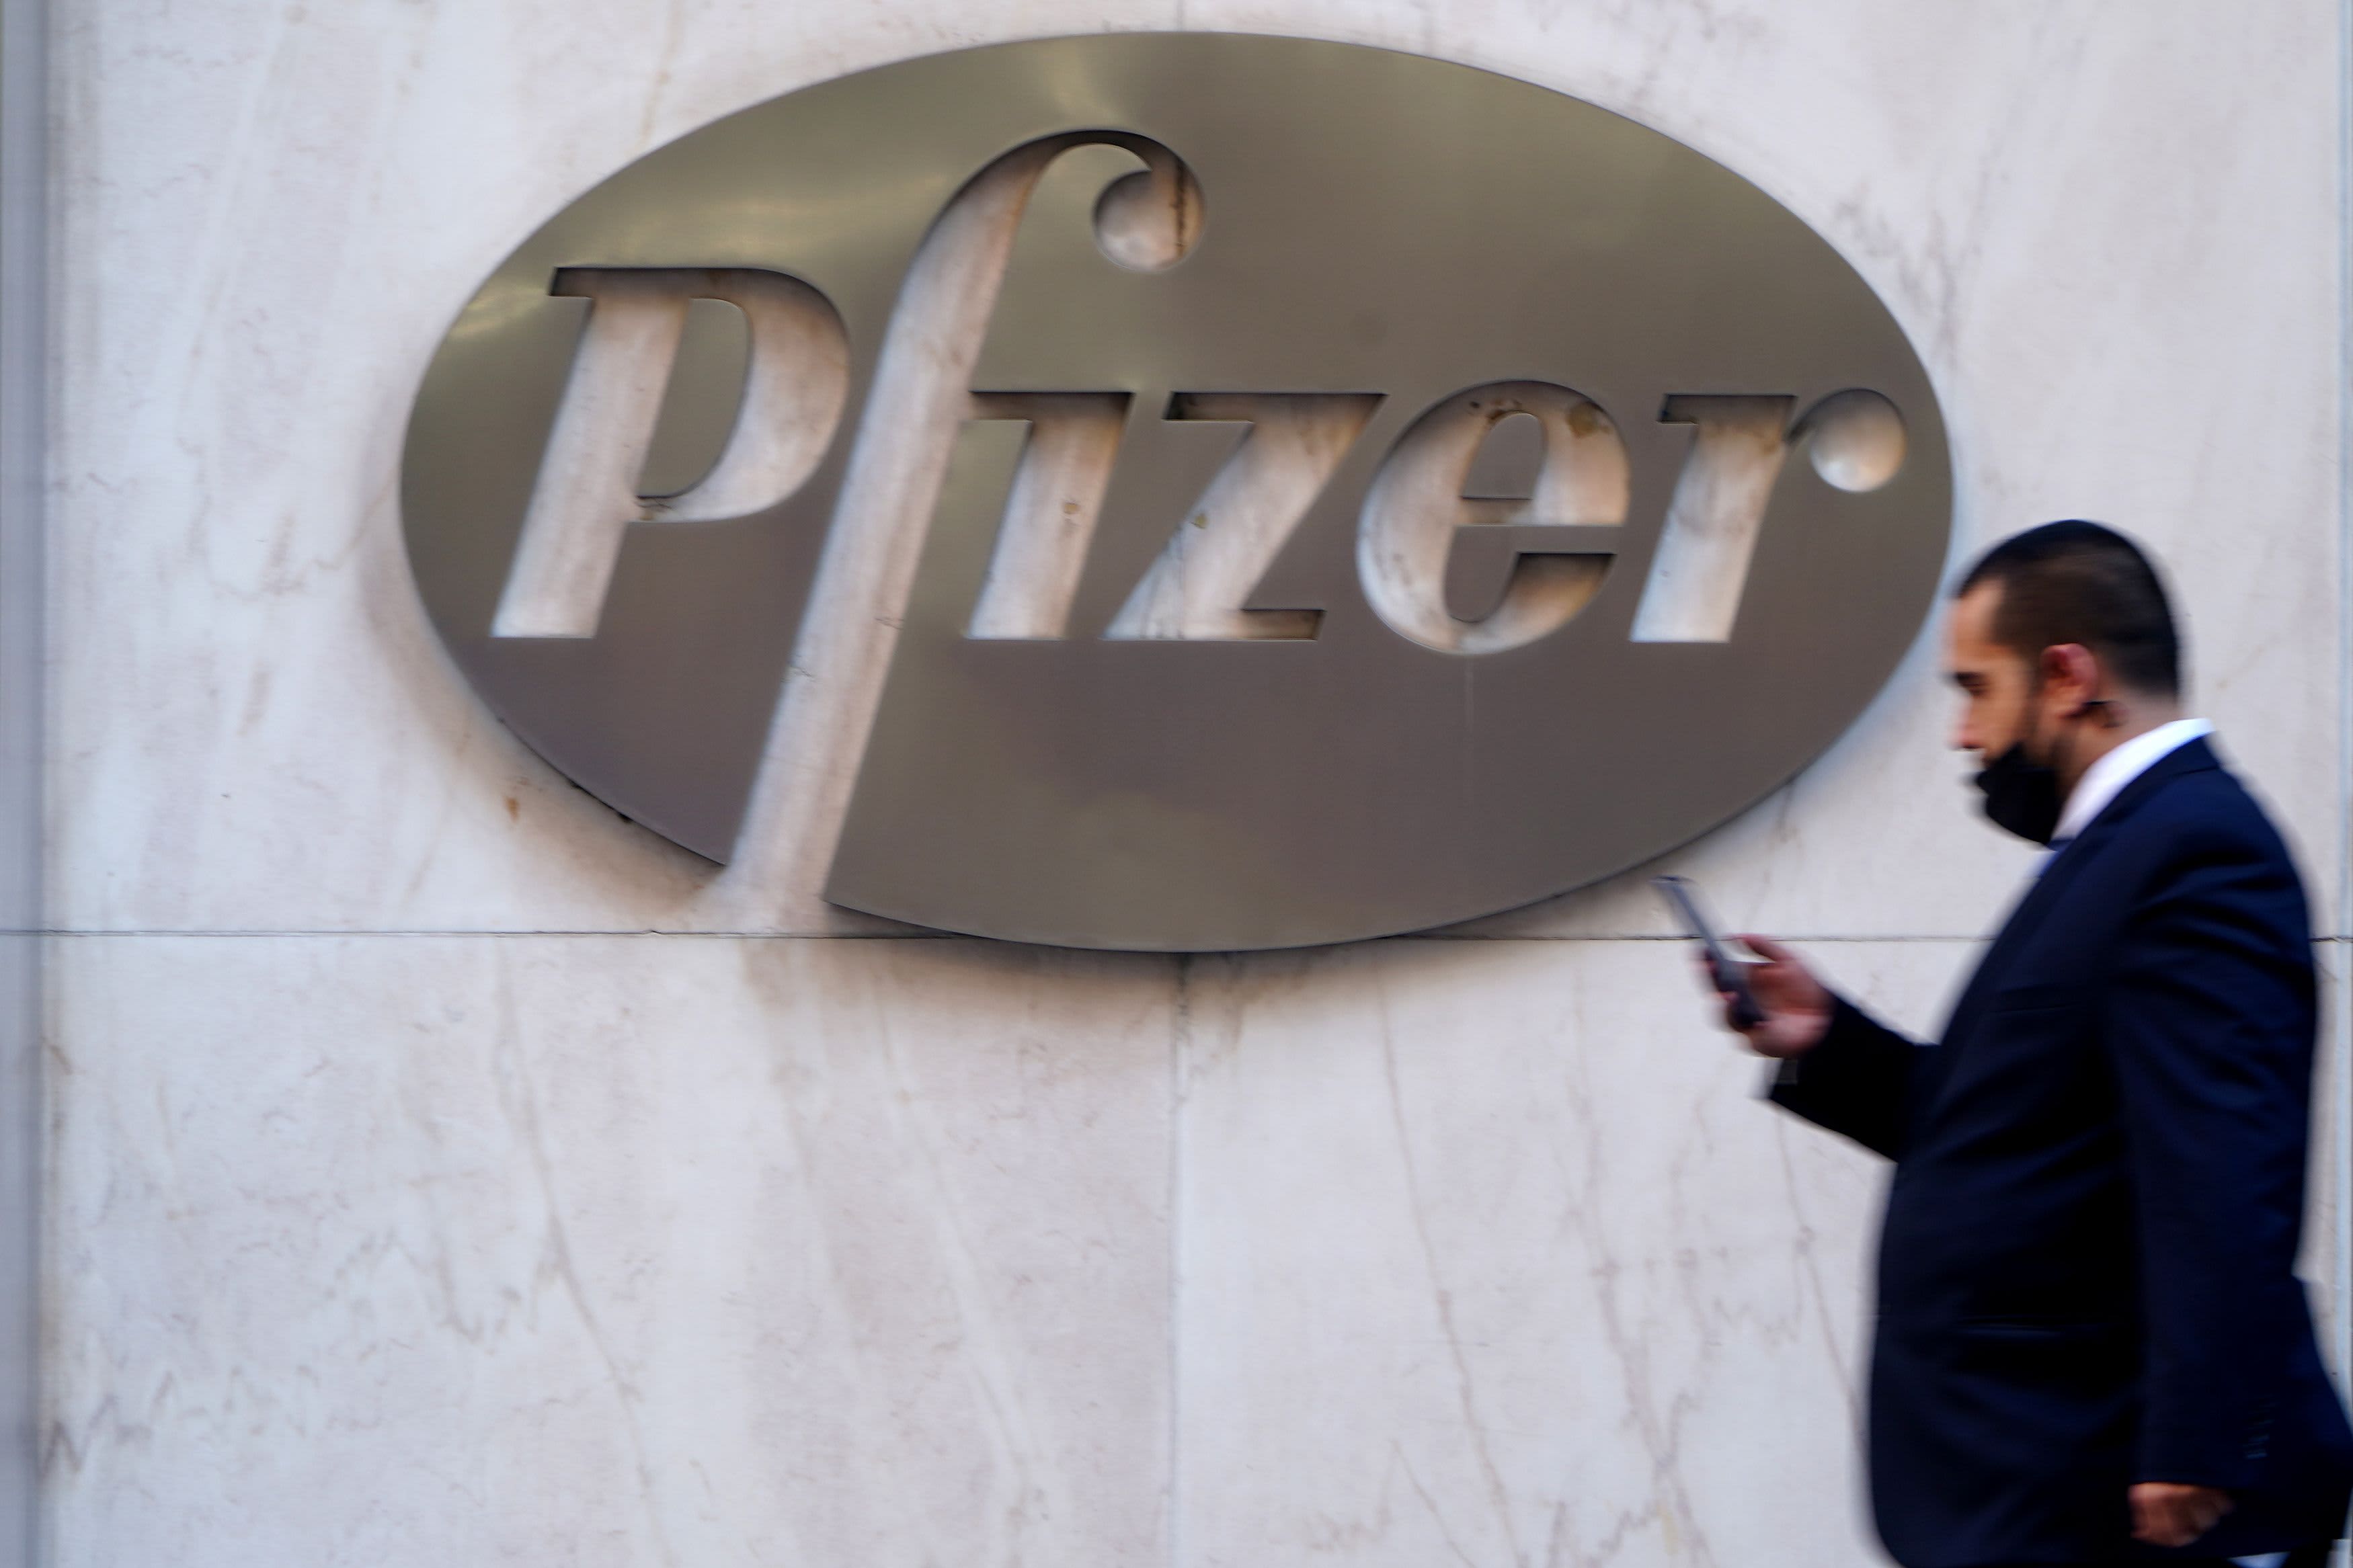 Pfizer to acquire Arena Pharmaceuticals in .7 billion deal